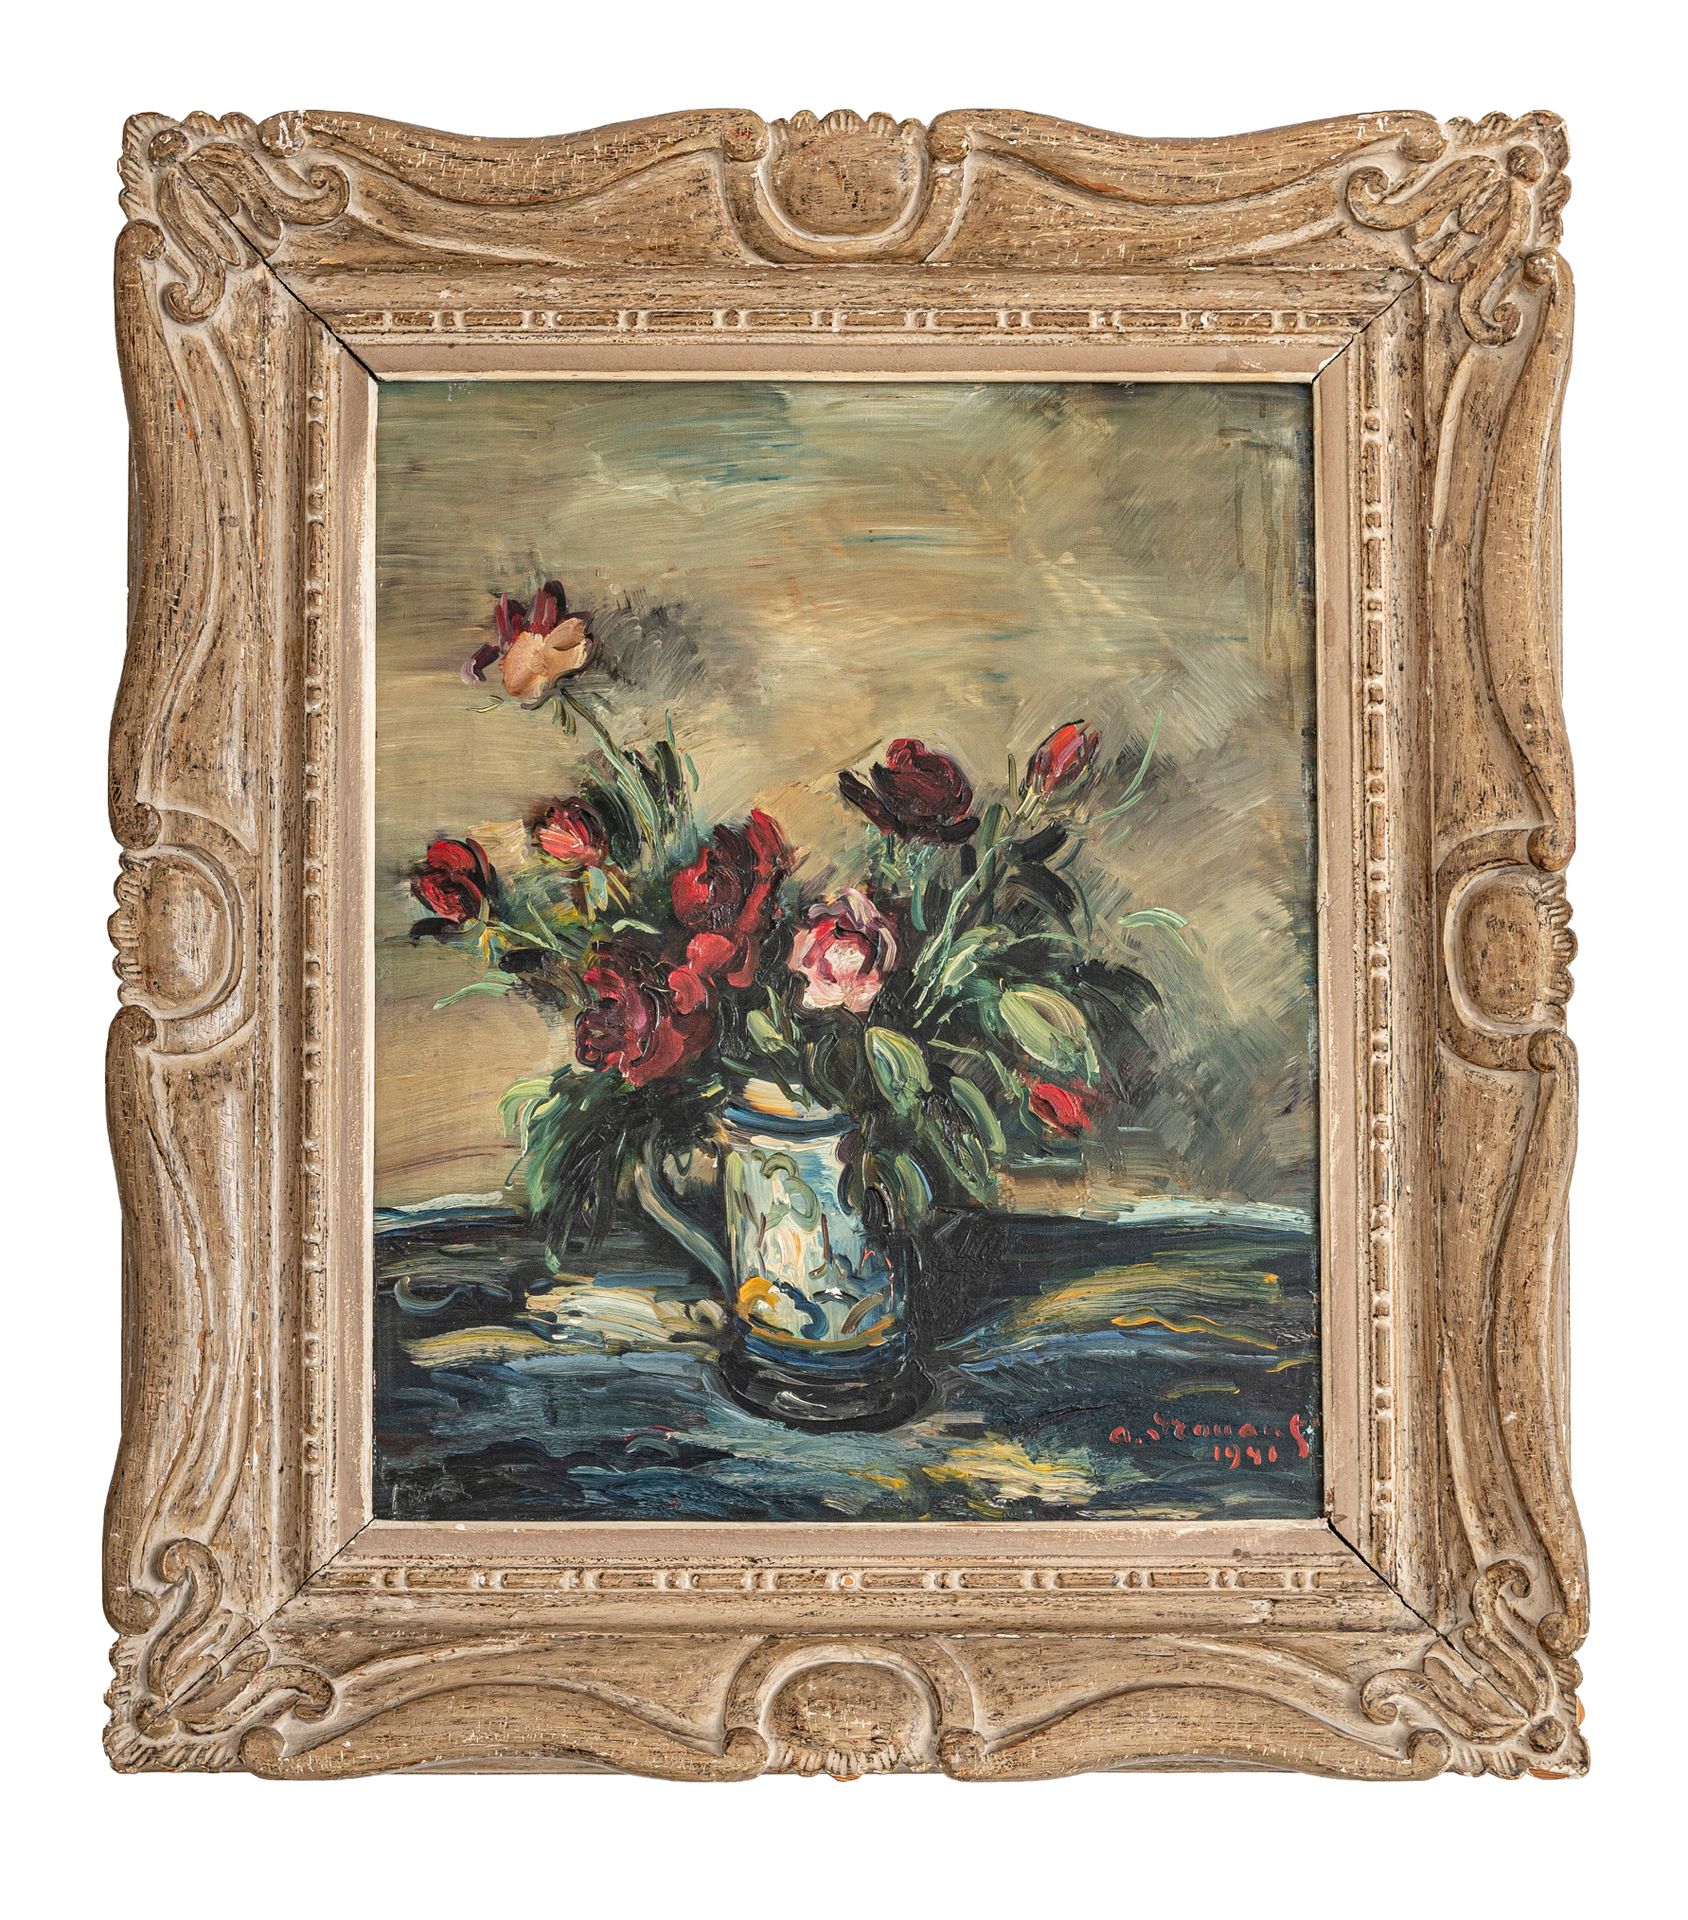 Null 阿尔芒-德鲁昂(Armand DROUANT) (1898-1978)

花束

布面油画，右下角有签名，日期为1941年

61 x 50厘米

有&hellip;